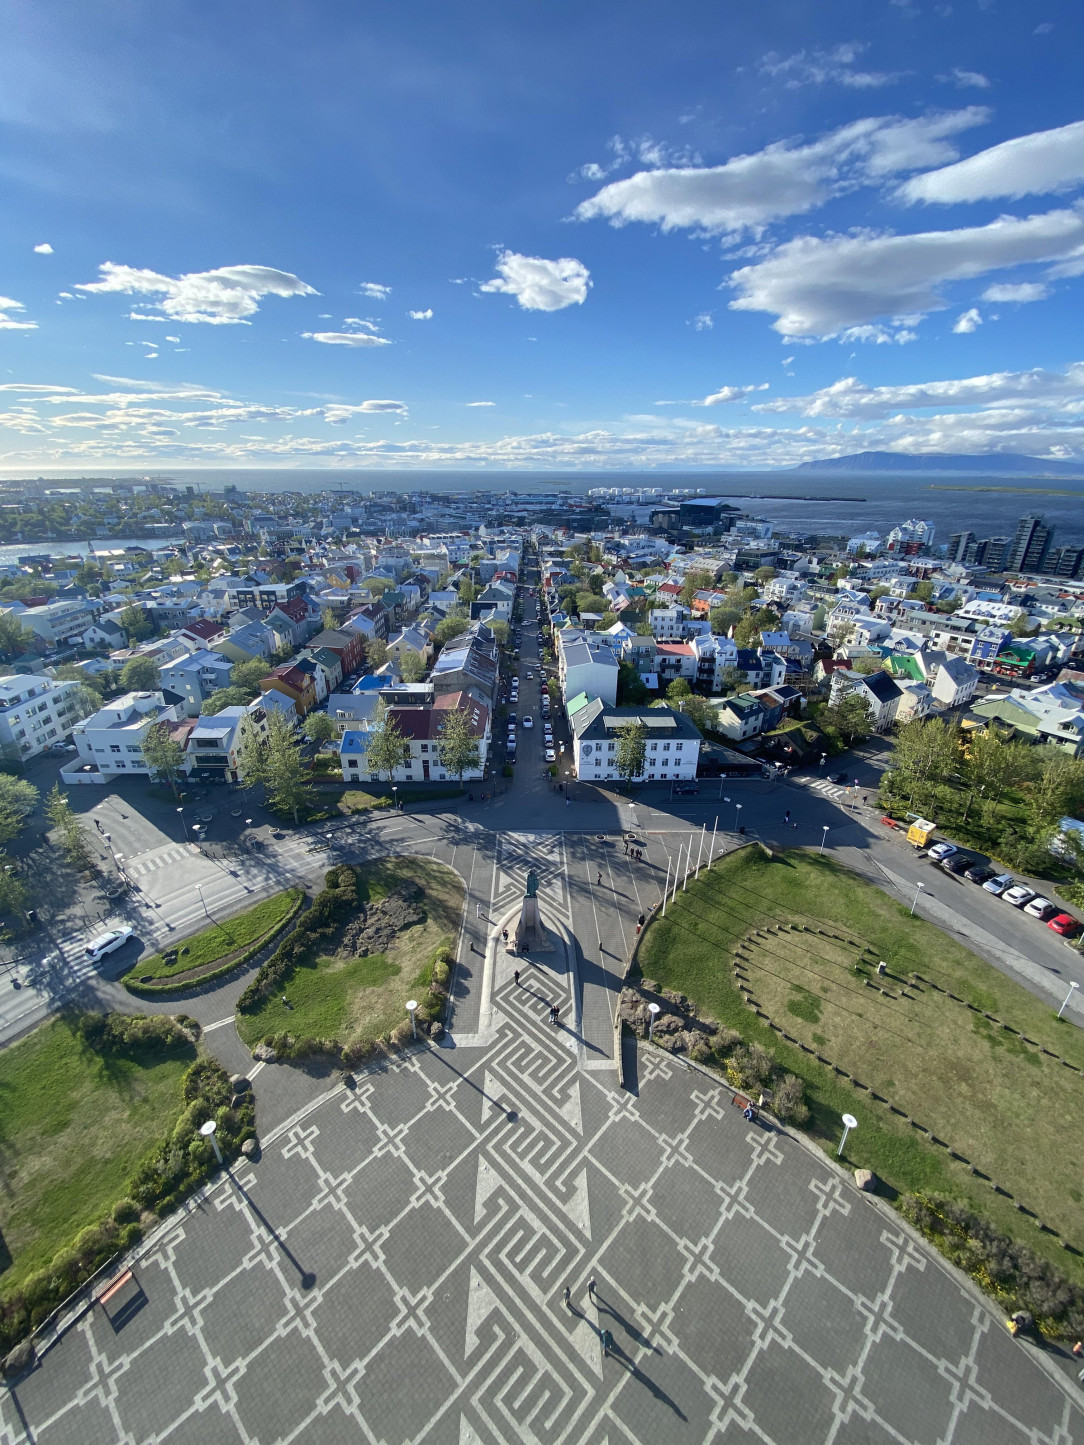 Reykjavik from the top of the Hallgrímskirkja